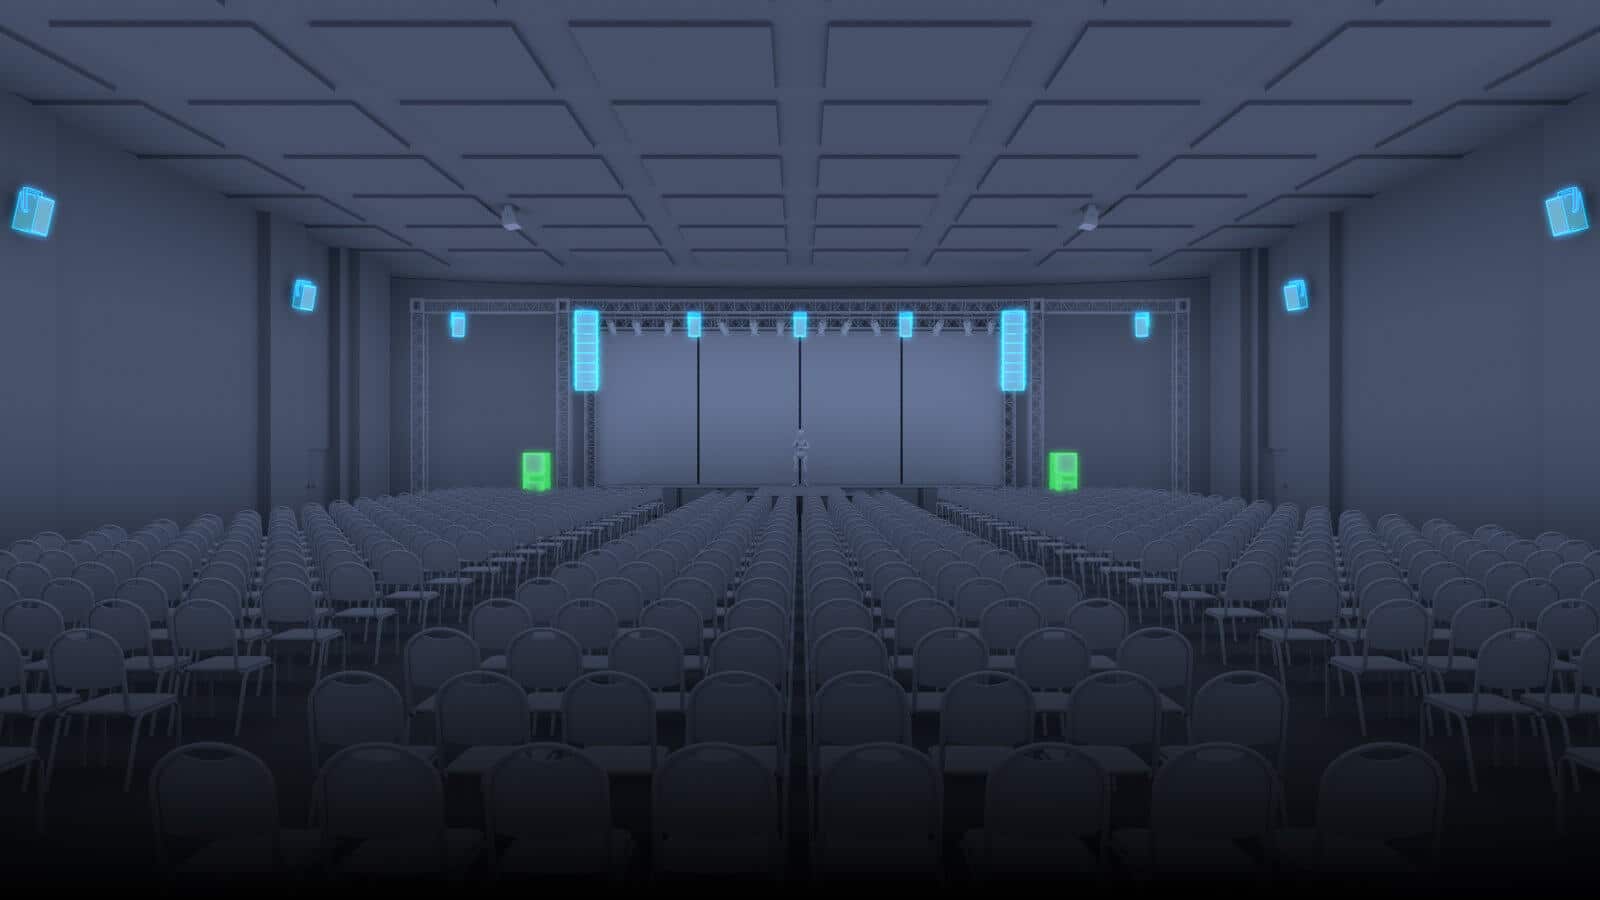 An auditorium with a surround sound set up